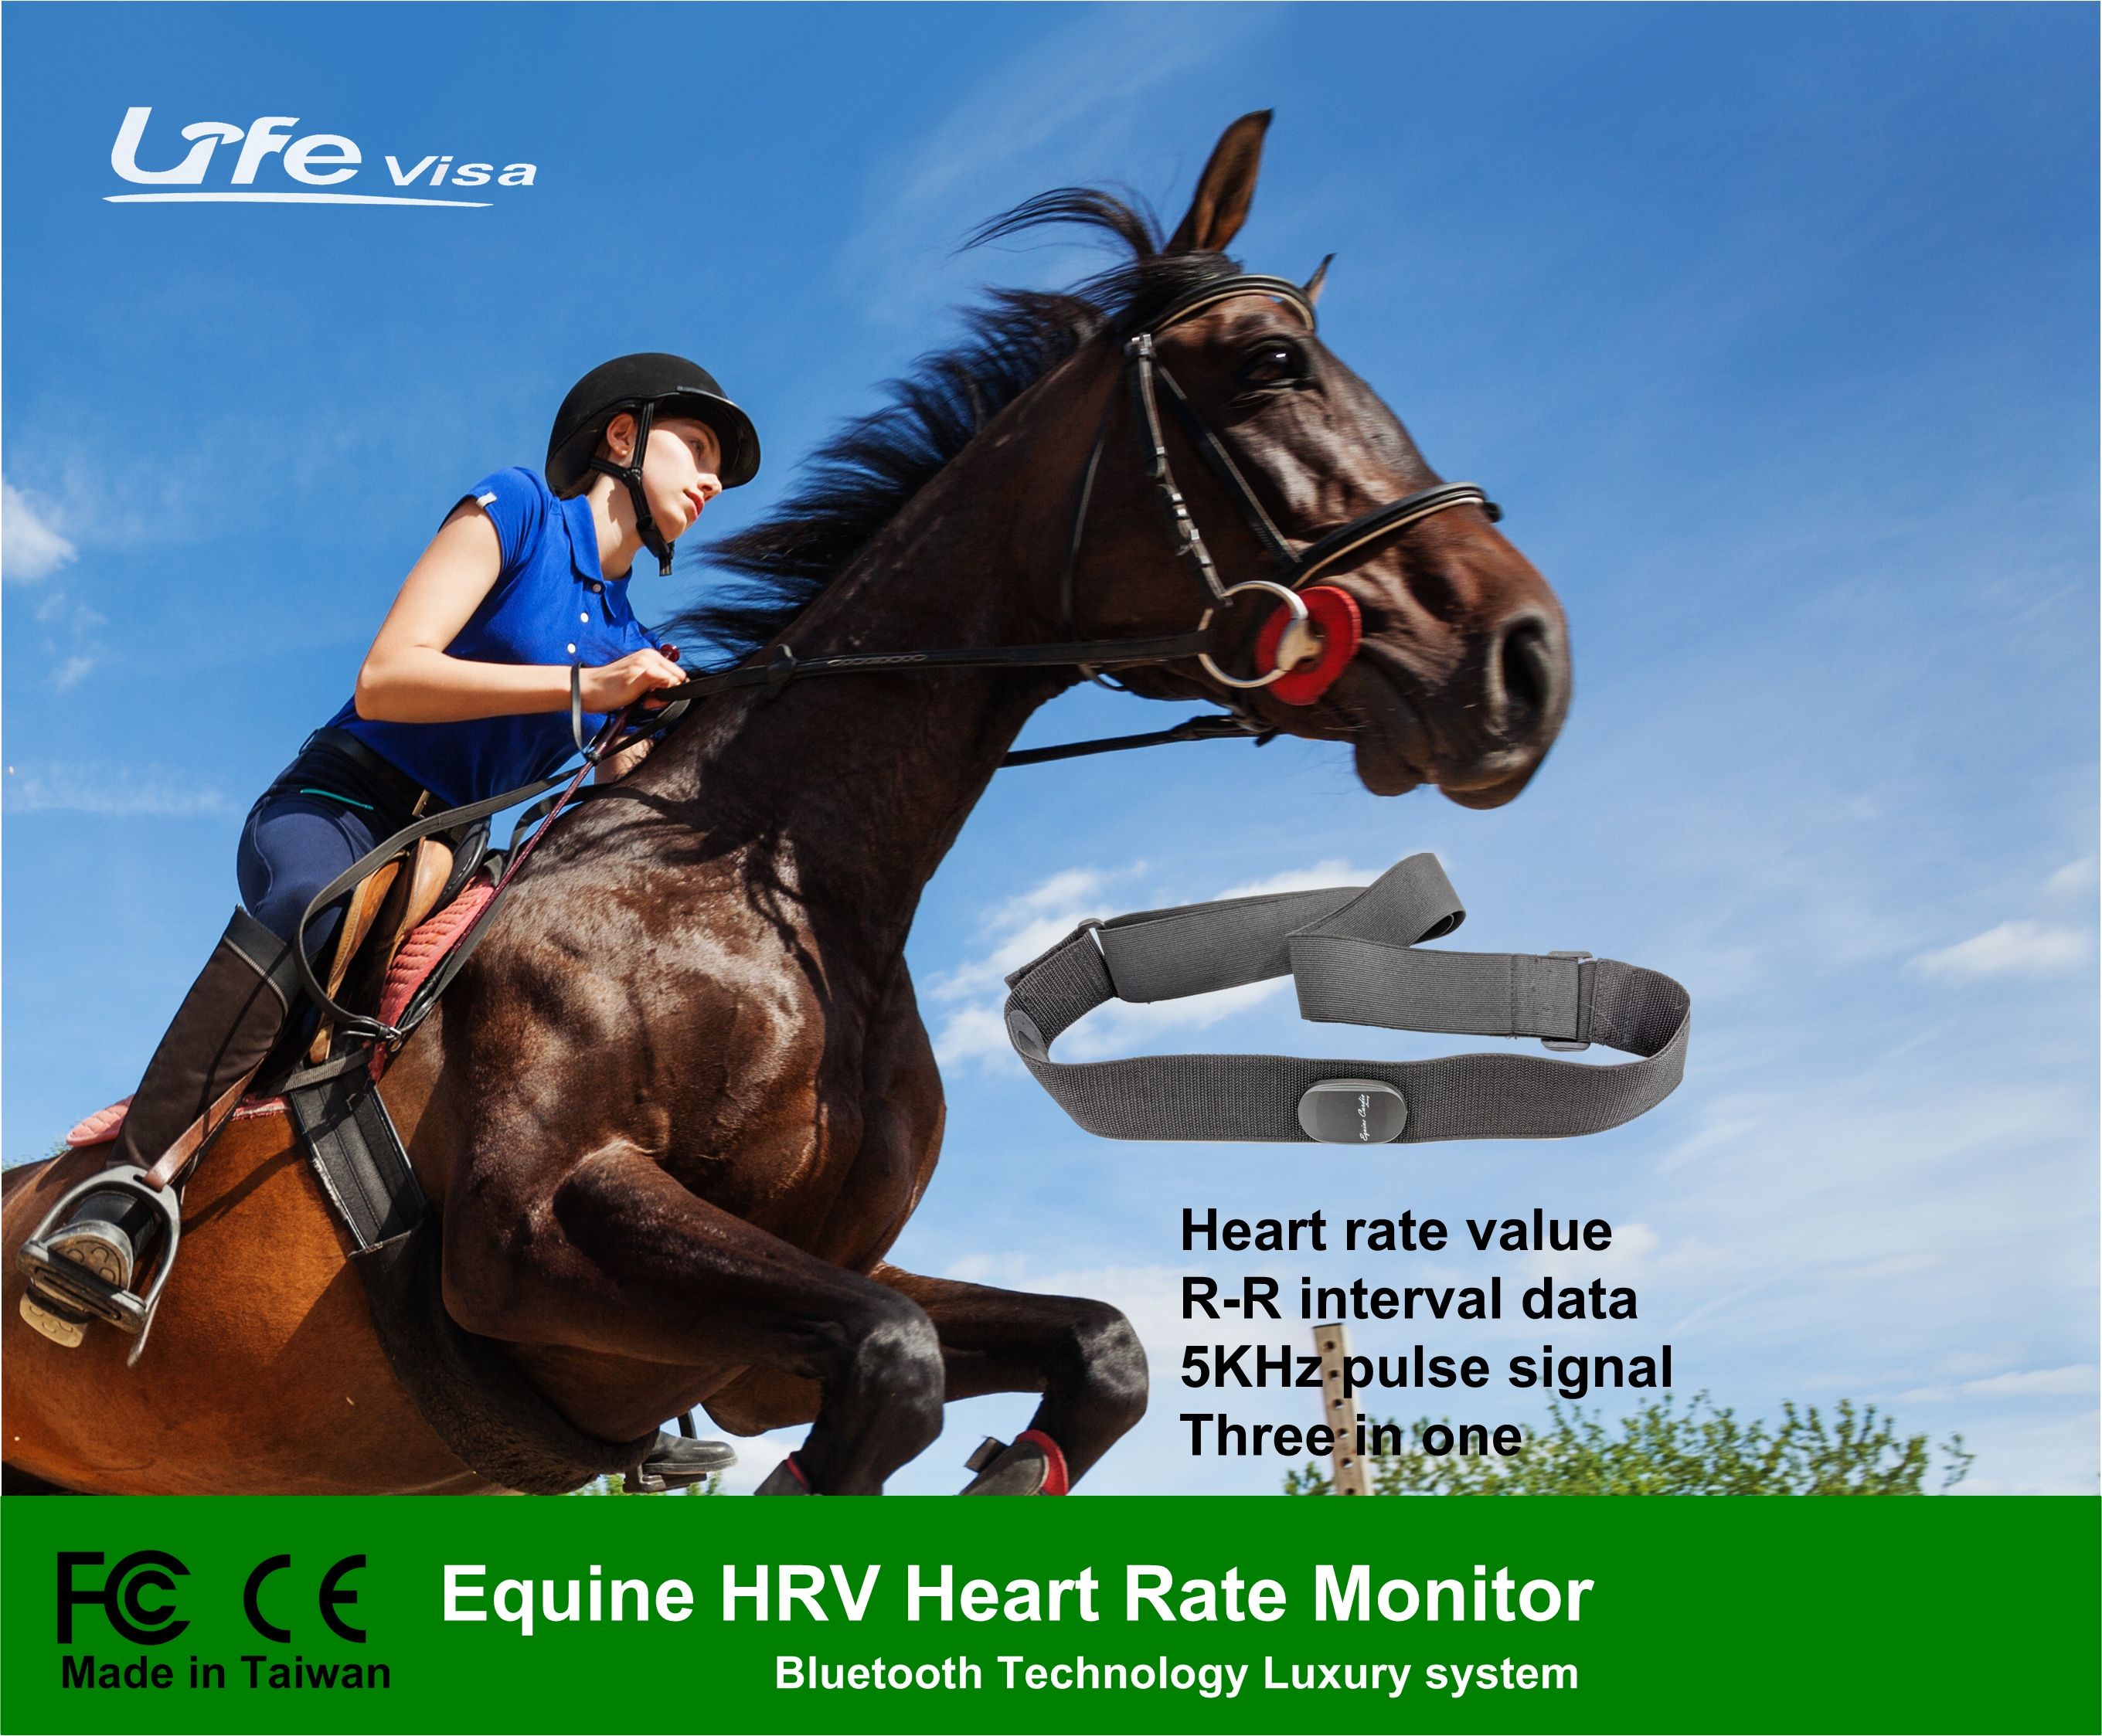 5.3KHz心率帶,gpulse heart rate monitor,Lifevisa,lifevisa,Taiwan Biotronic,5Khz heart rate,馬心率，馬心率監視器,horse heart rate monitor